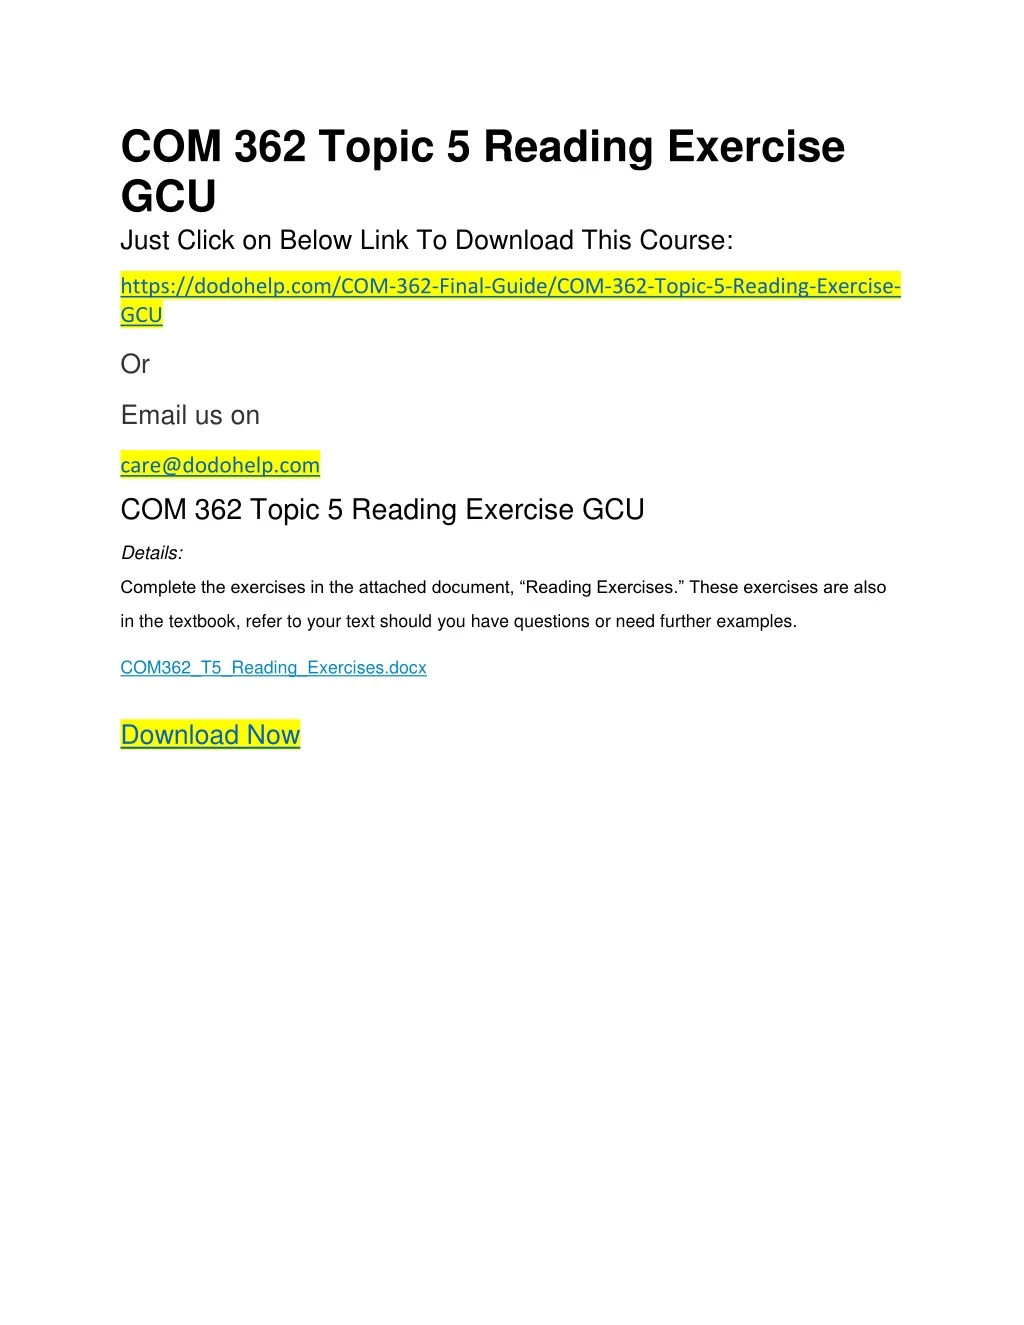 com 362 topic 5 reading exercise gcu just click